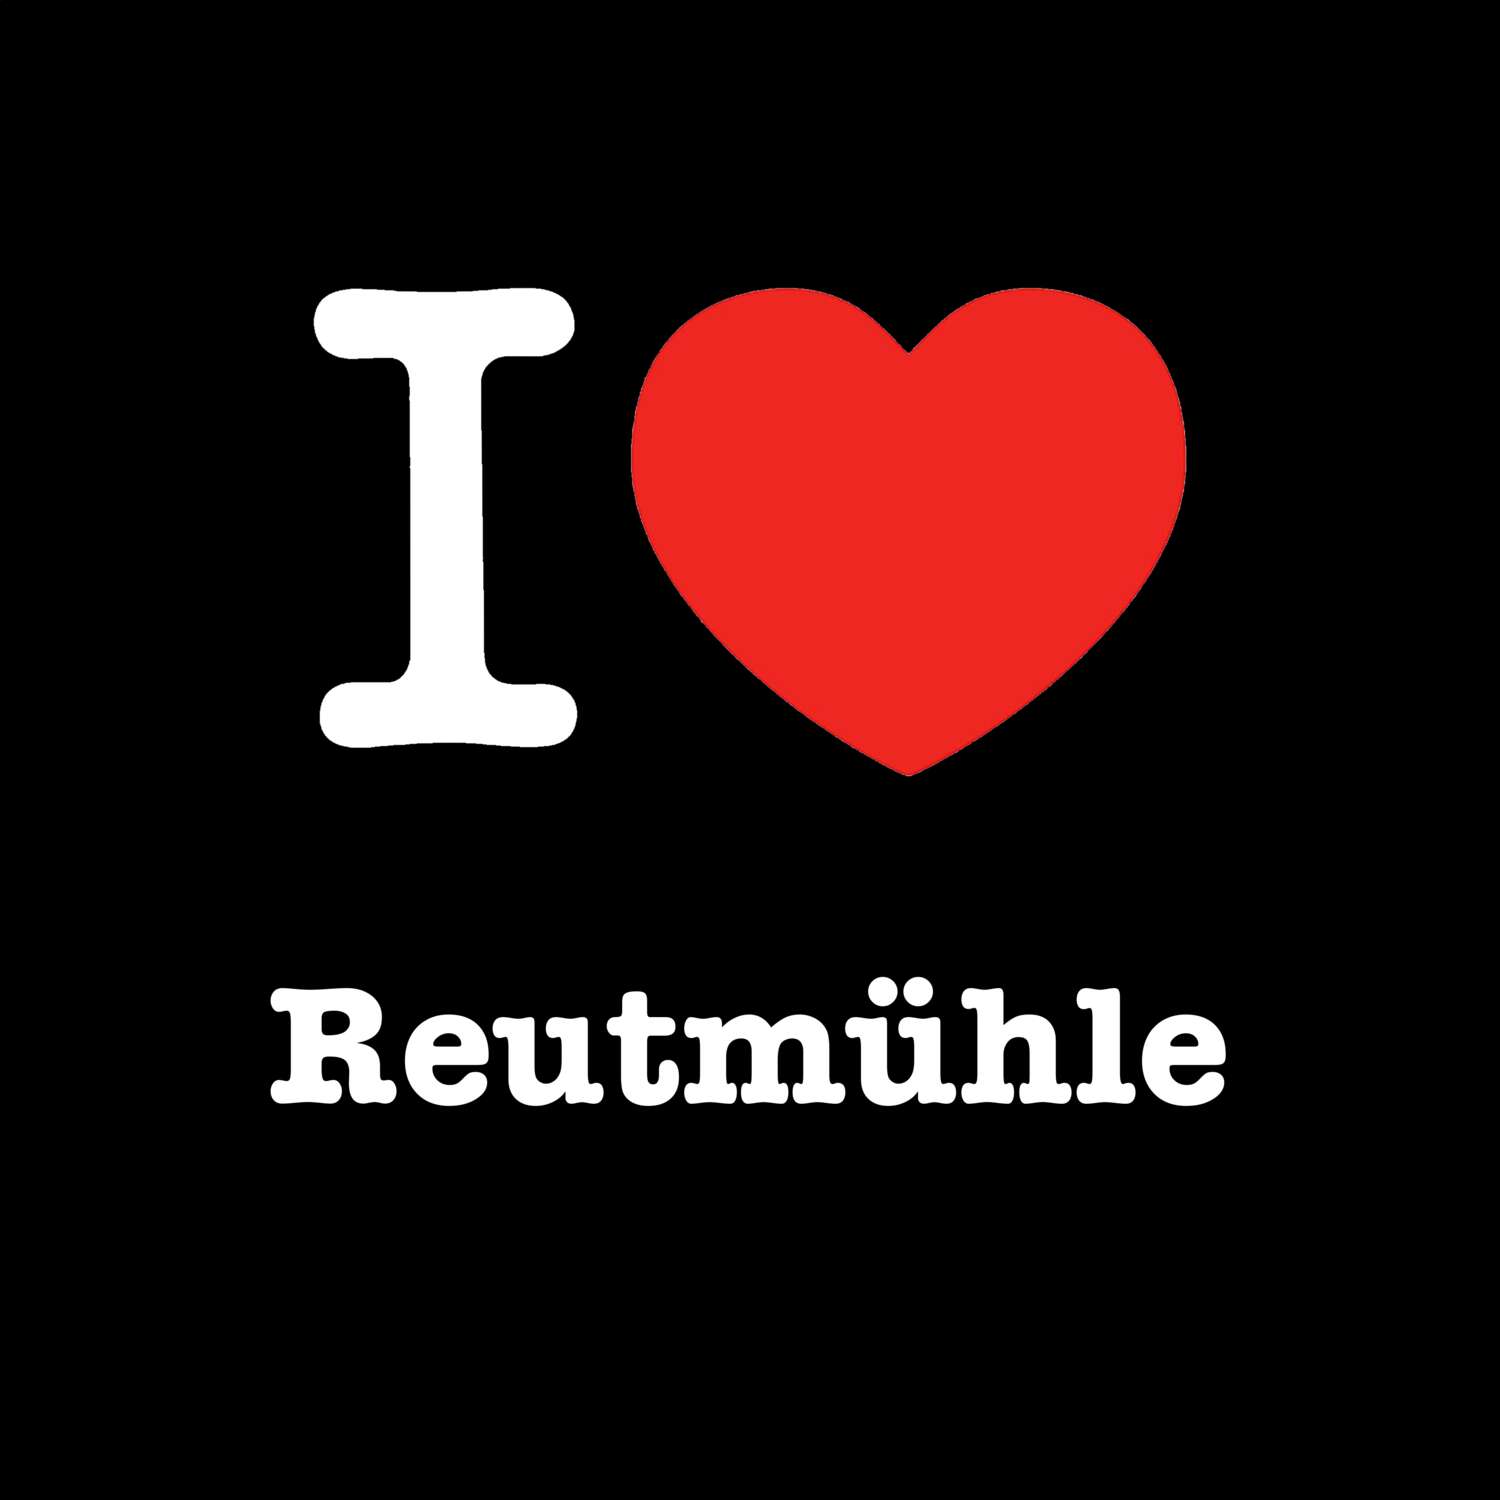 Reutmühle T-Shirt »I love«